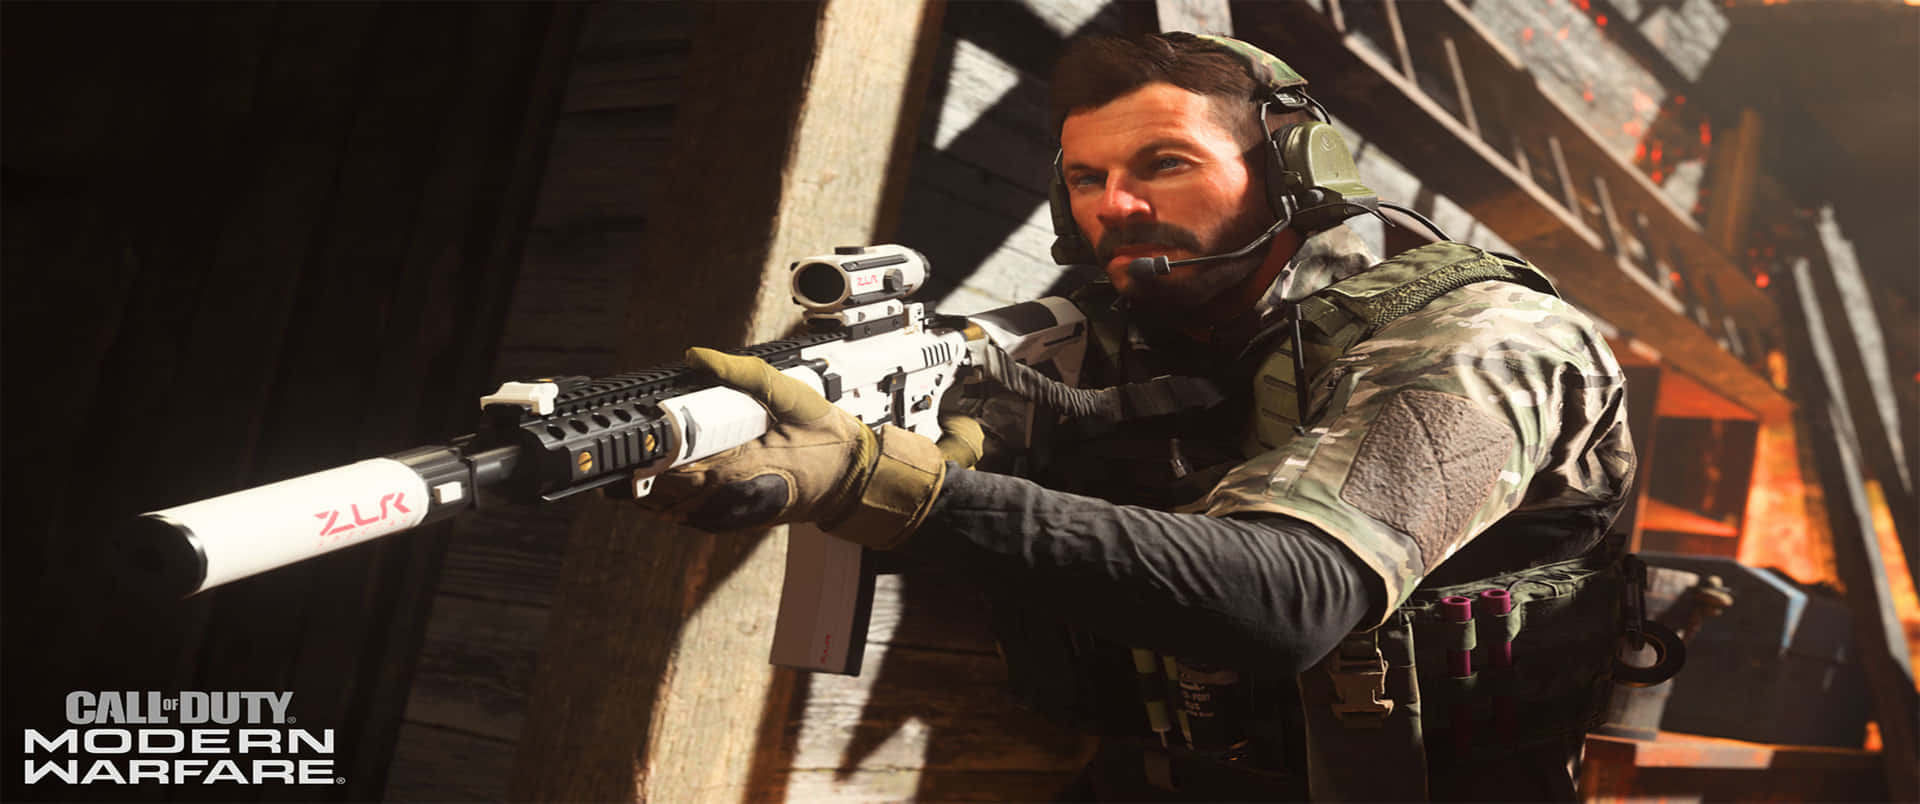 Alex Keller 3440x1440p Call Of Duty Modern Warfare Background